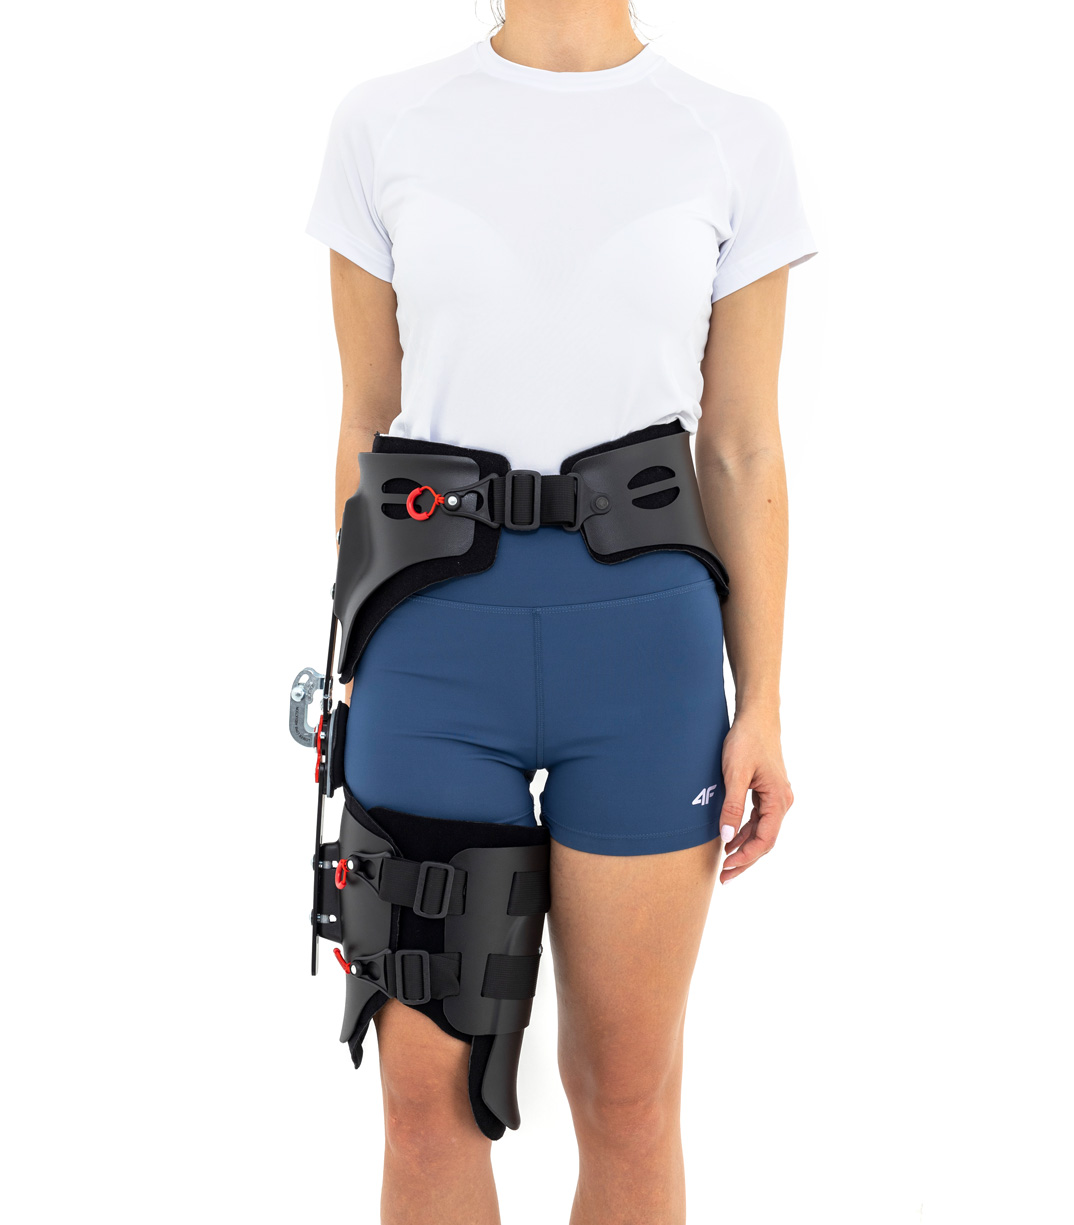 Hip brace AM-SB-08  Reh4Mat – lower limb orthosis and braces